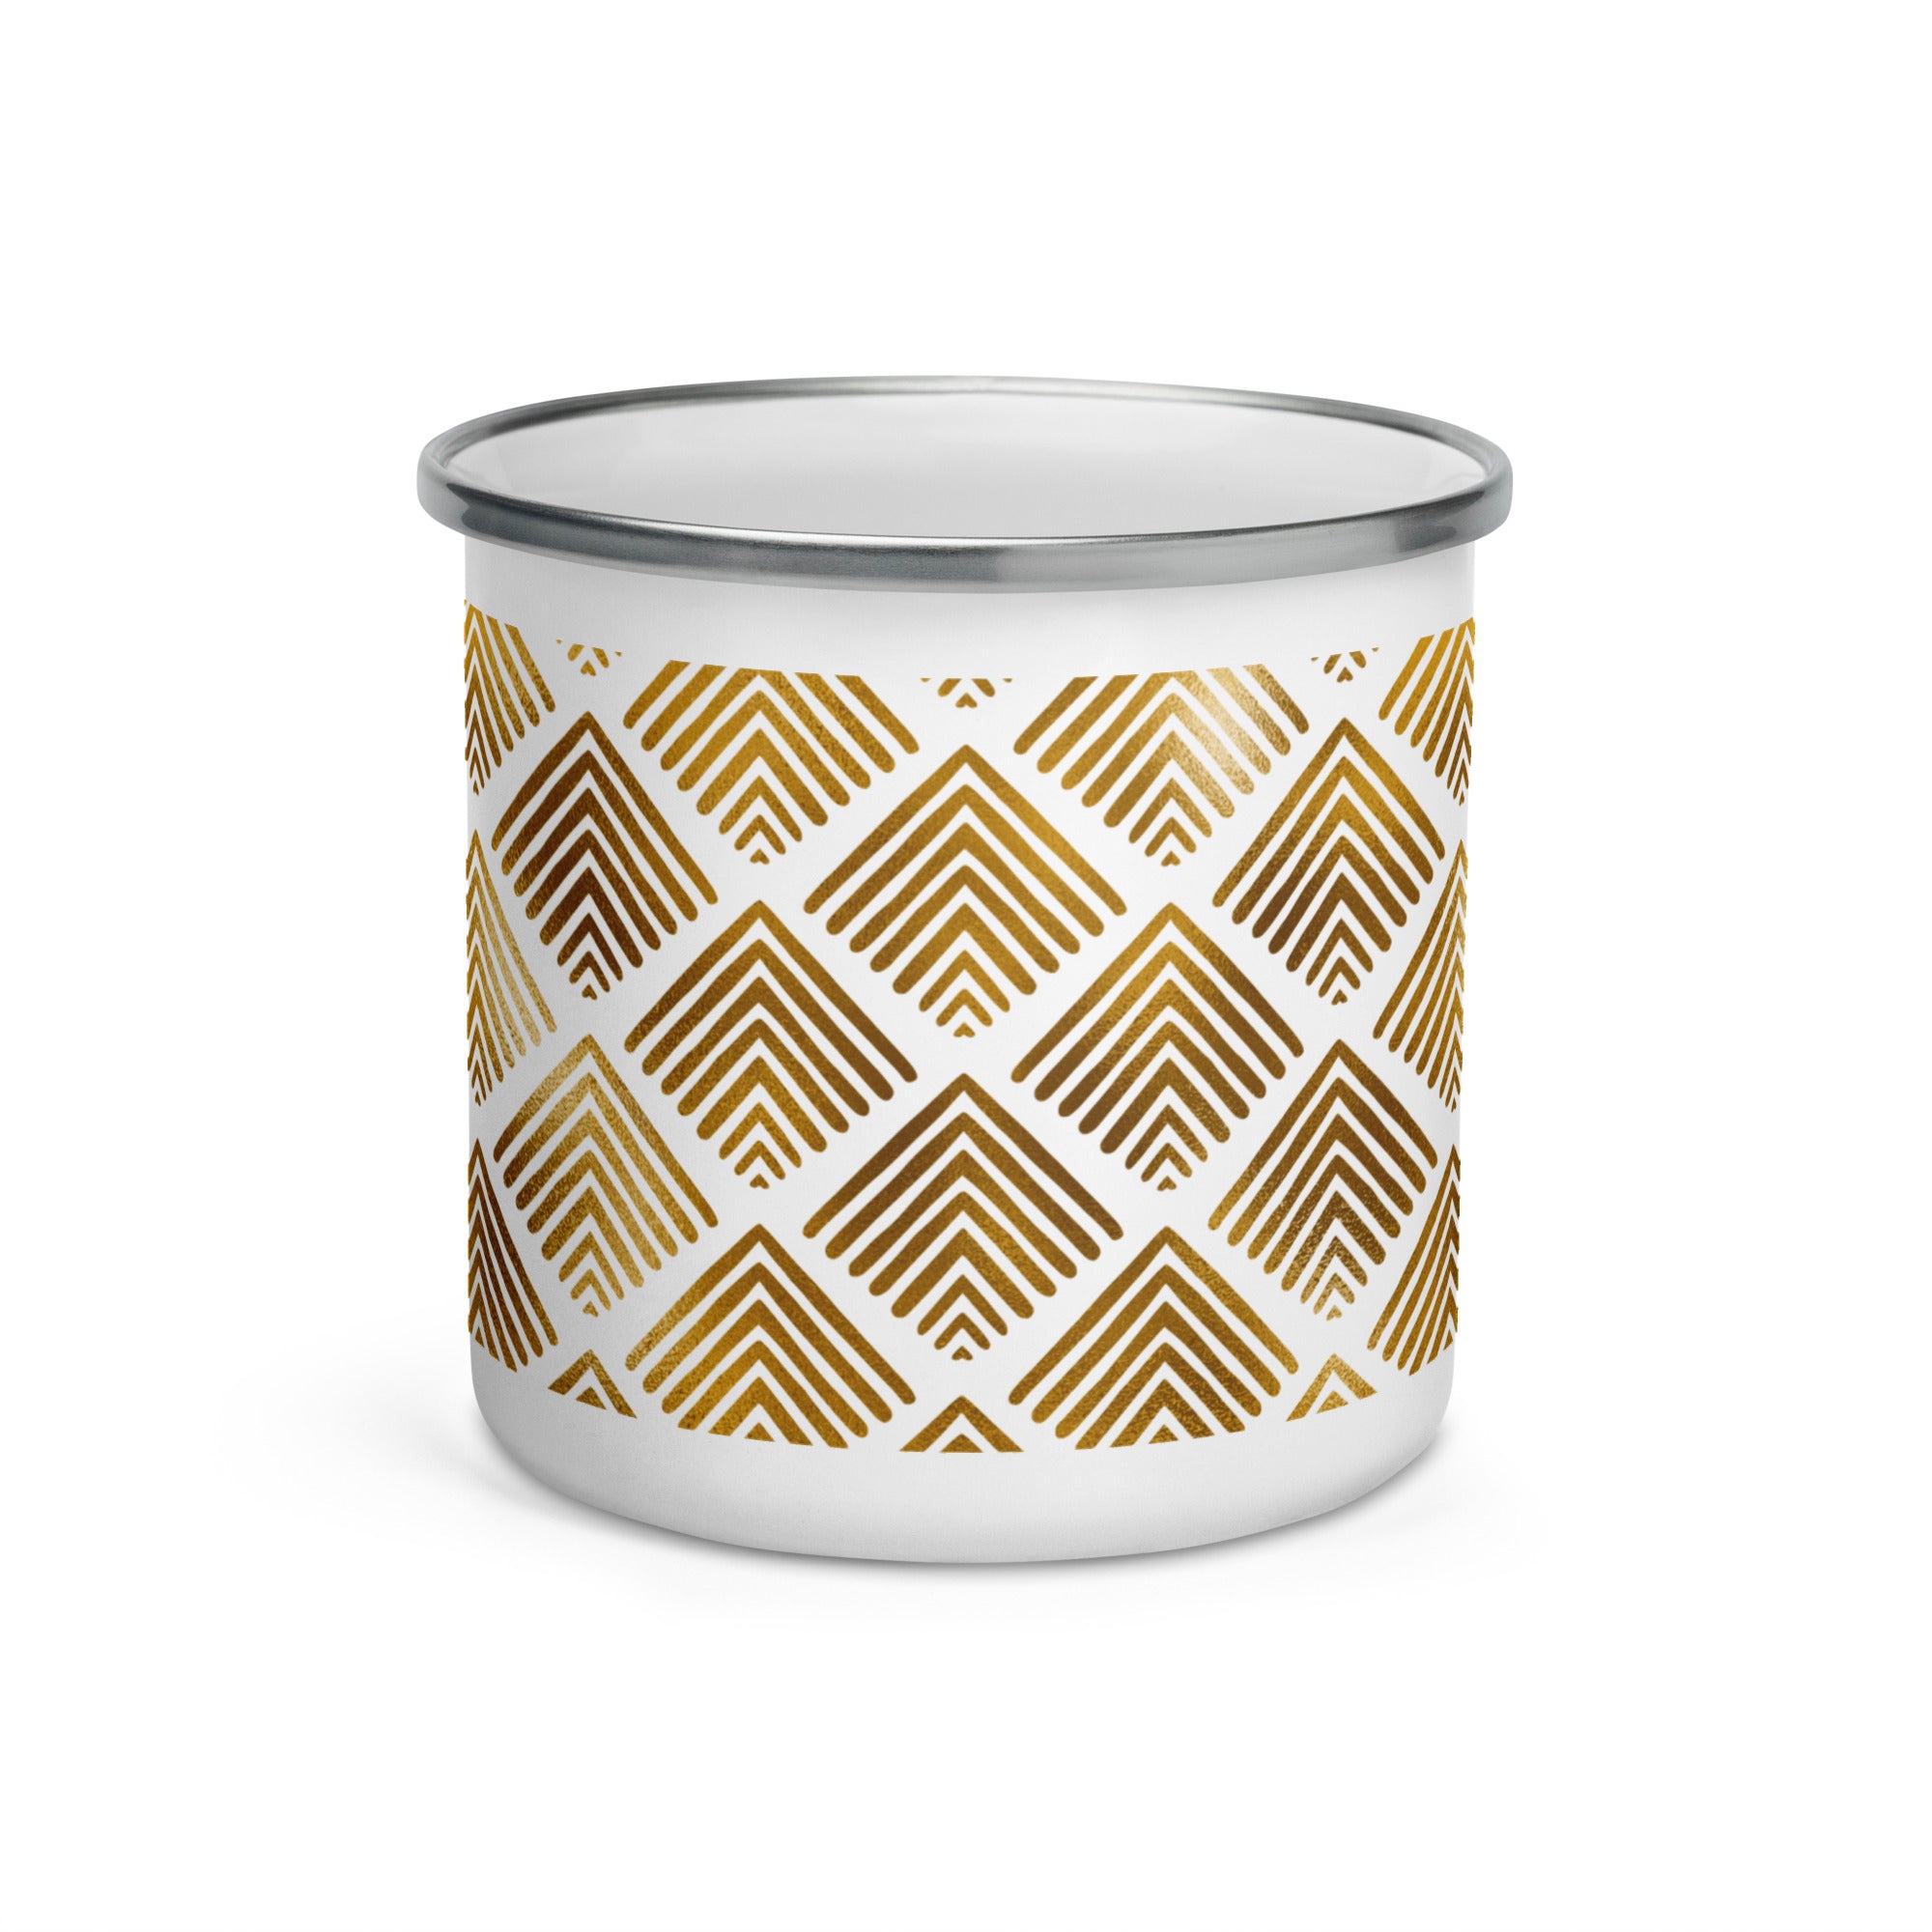 Enamel Mug- Golden Pattern 08